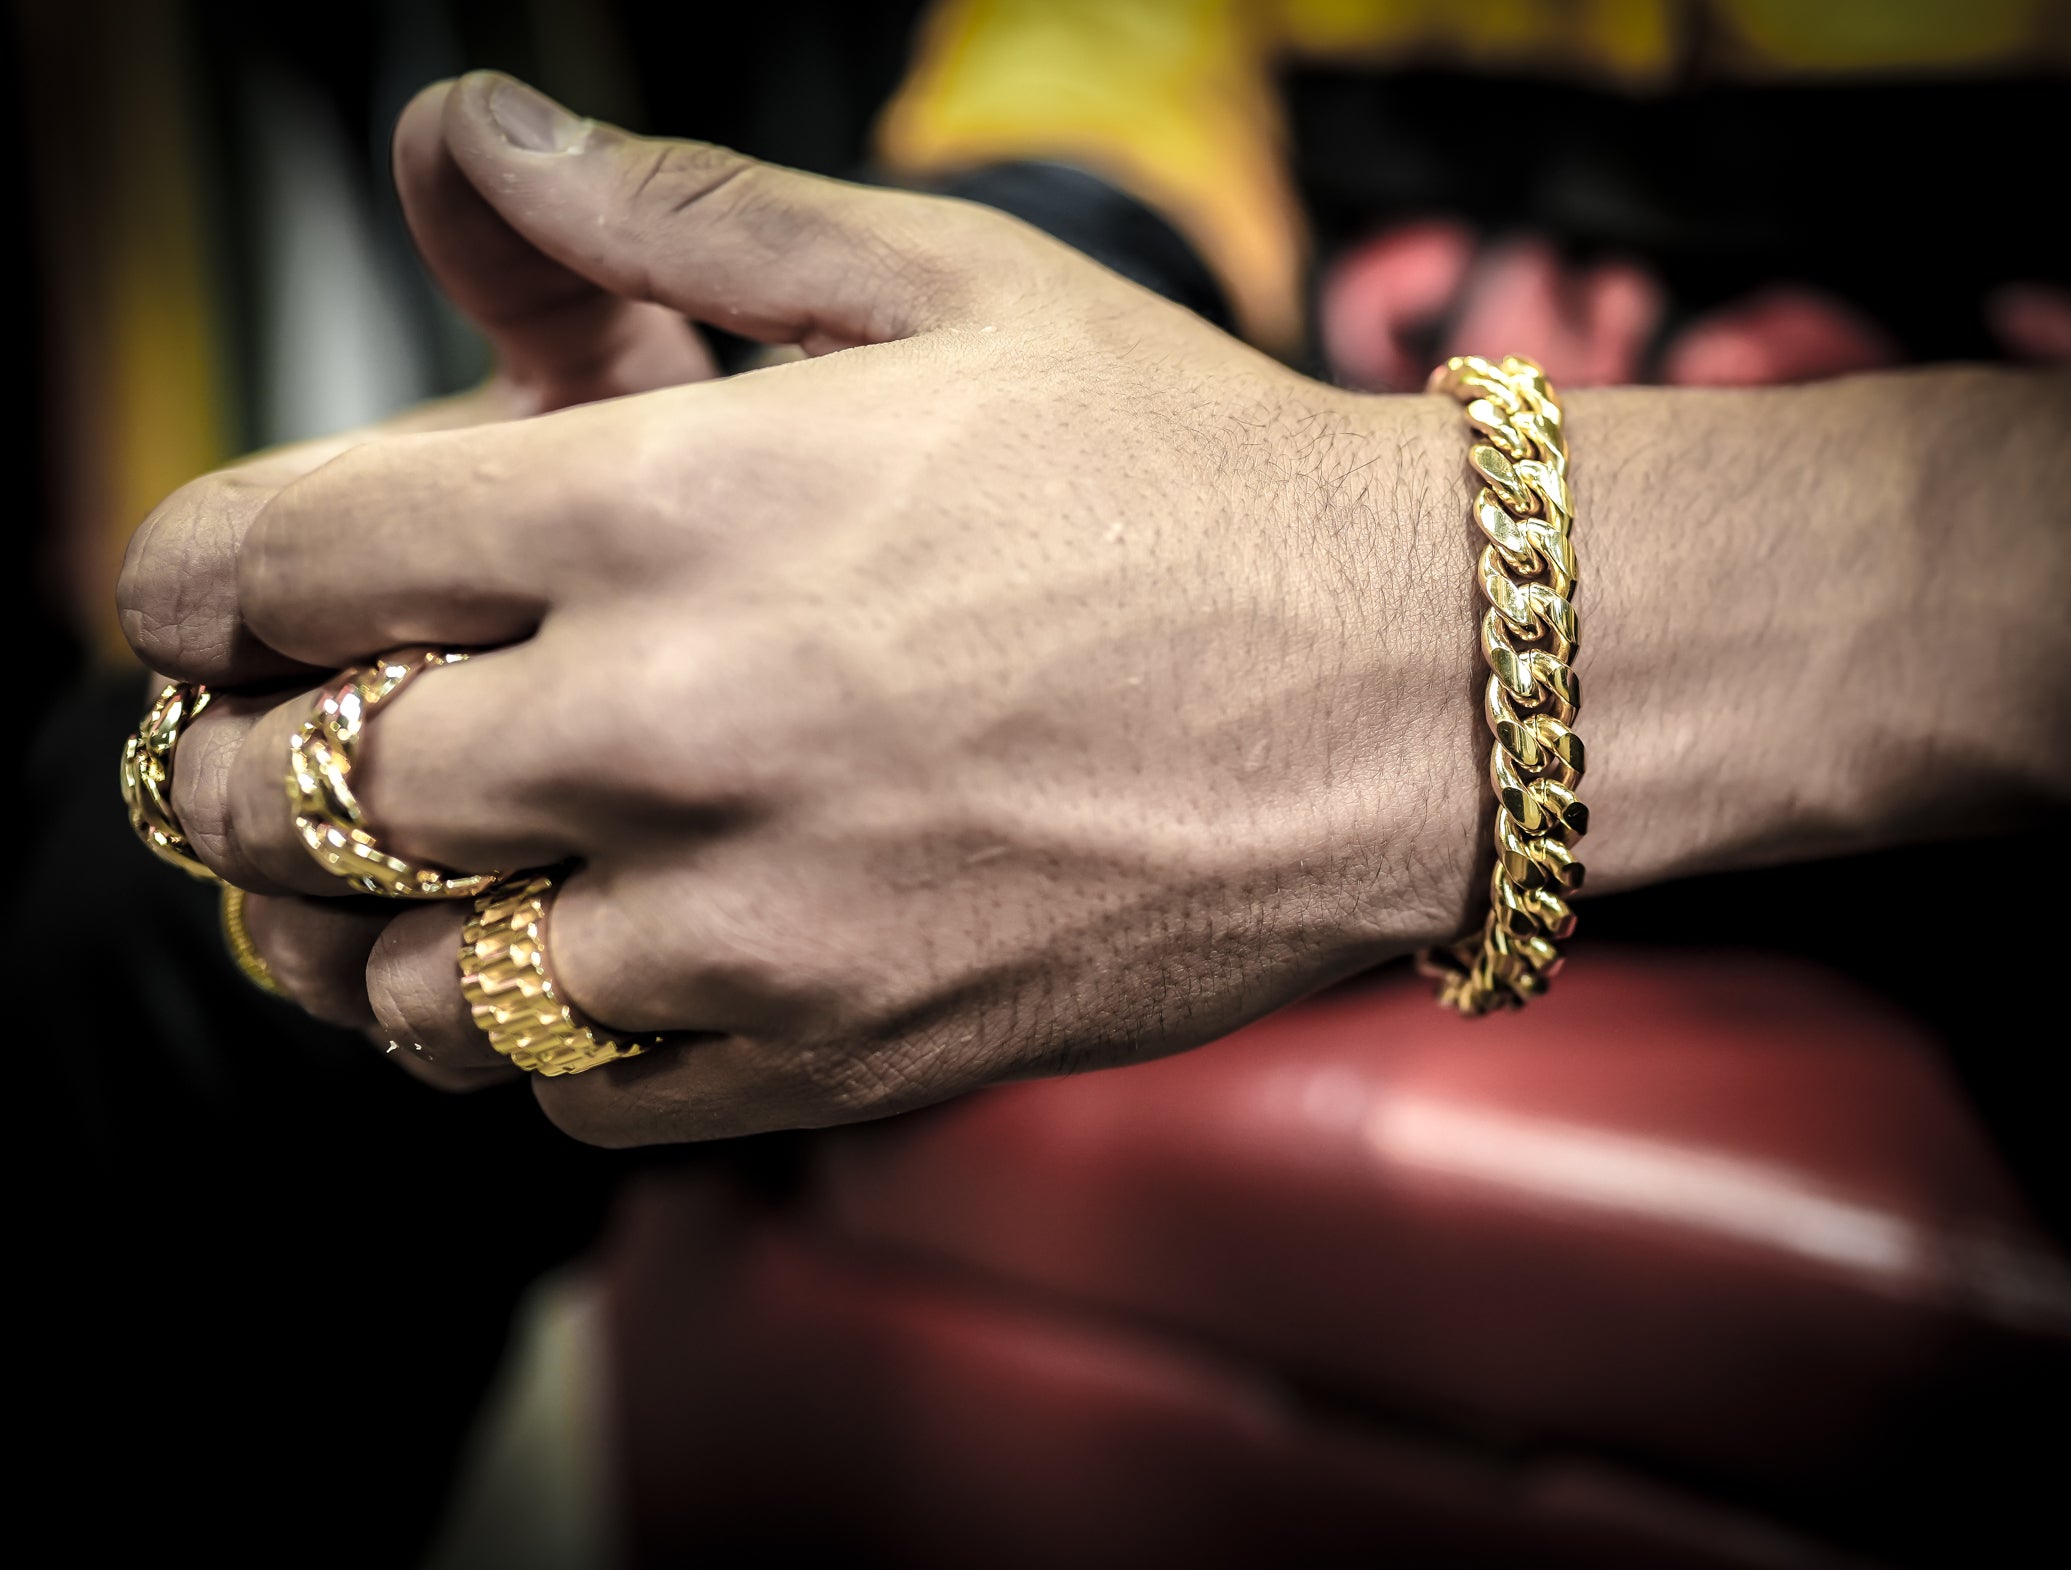 Amazon.com: Nuragold 14k Yellow Gold 9mm Thick Miami Cuban Link Chain  Bracelet, Mens Wide Jewelry Box Clasp 7